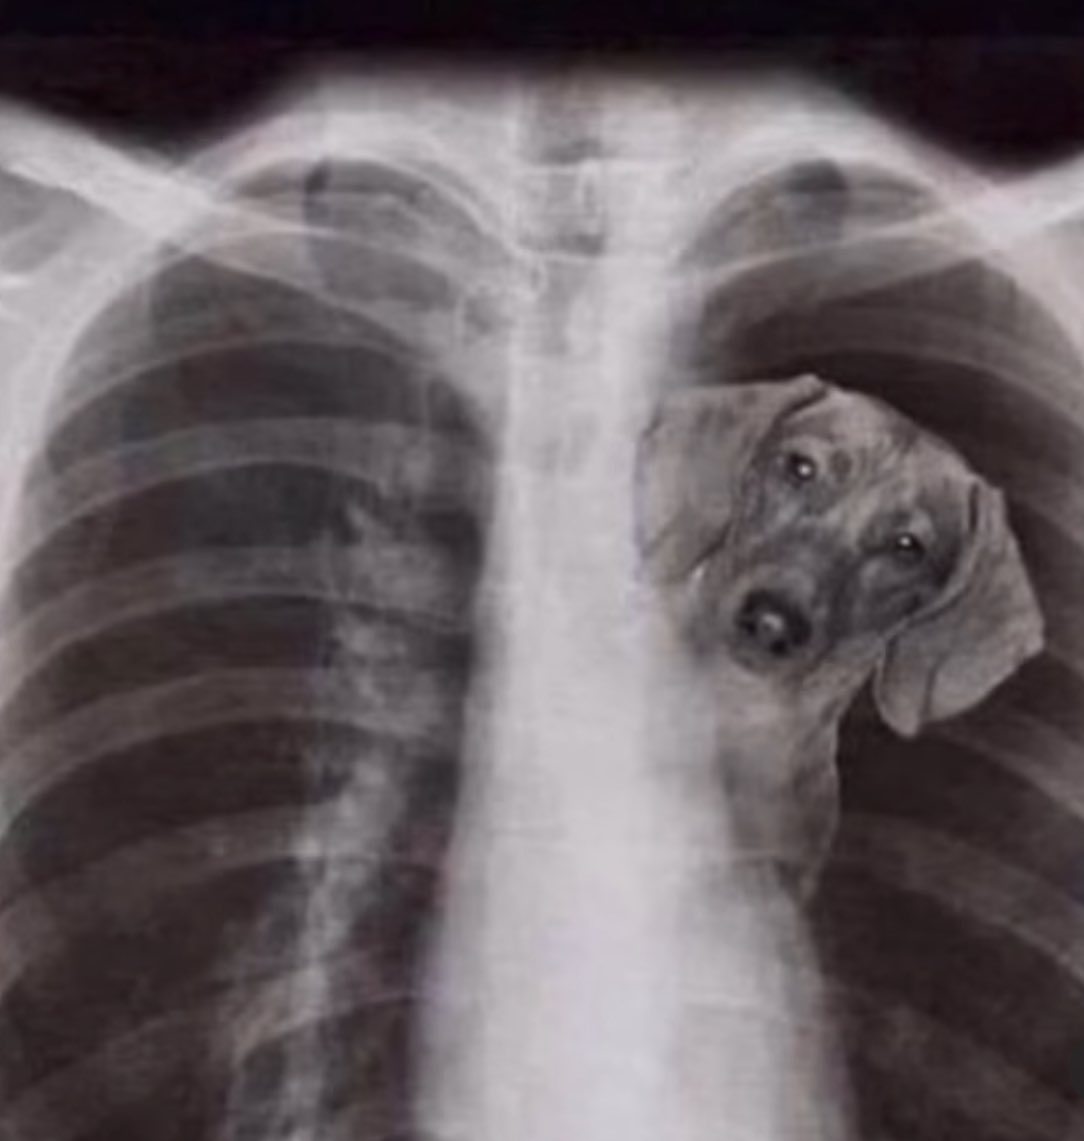 Gerrit Cole's x-ray https://t.co/69vaELvY38